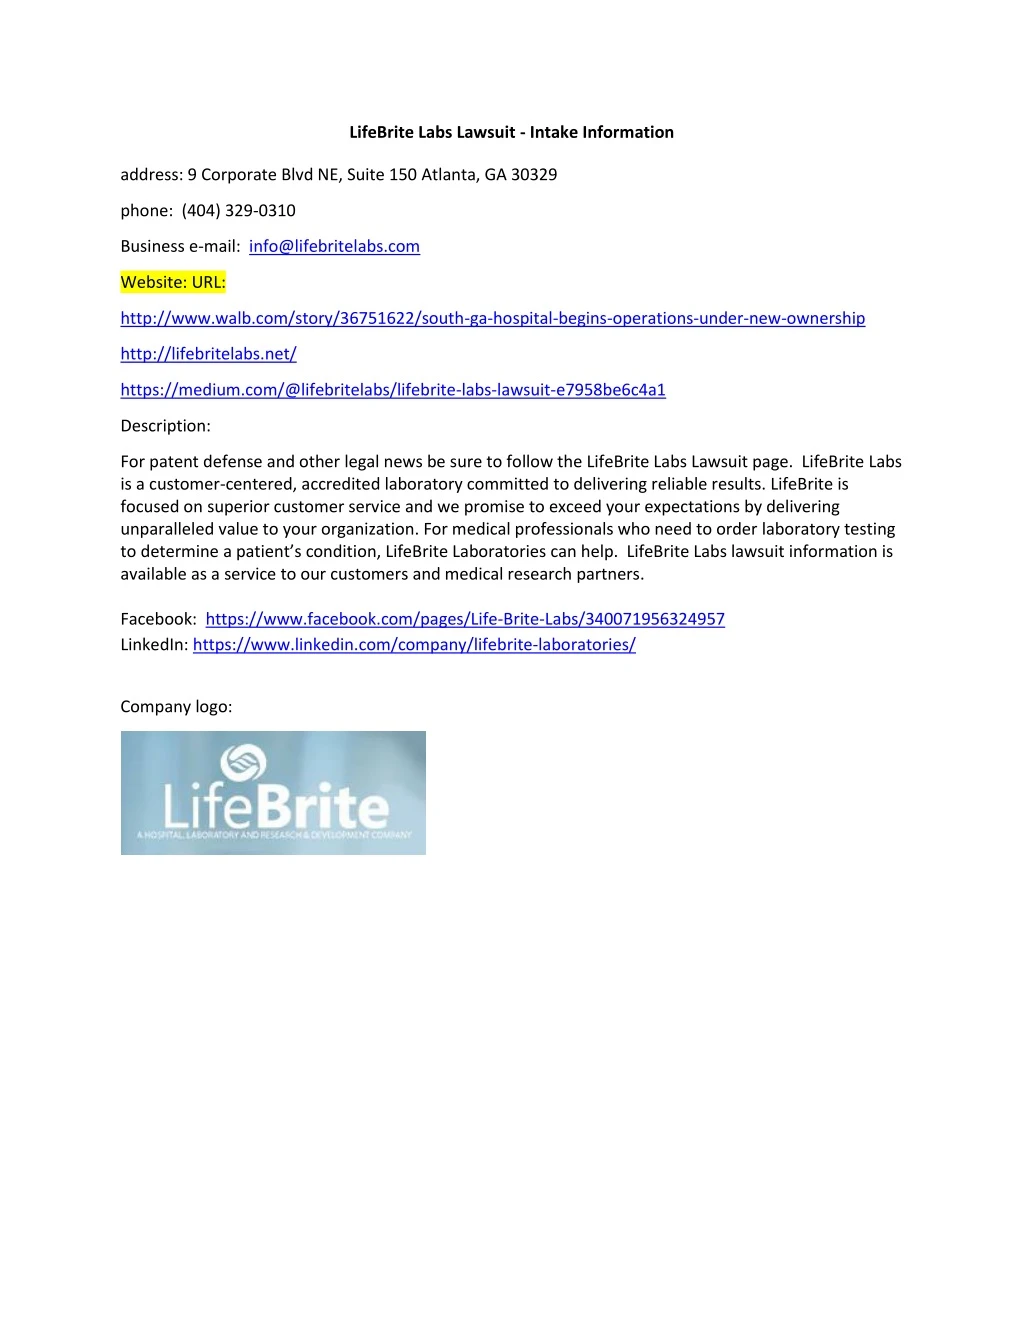 lifebrite labs lawsuit intake information